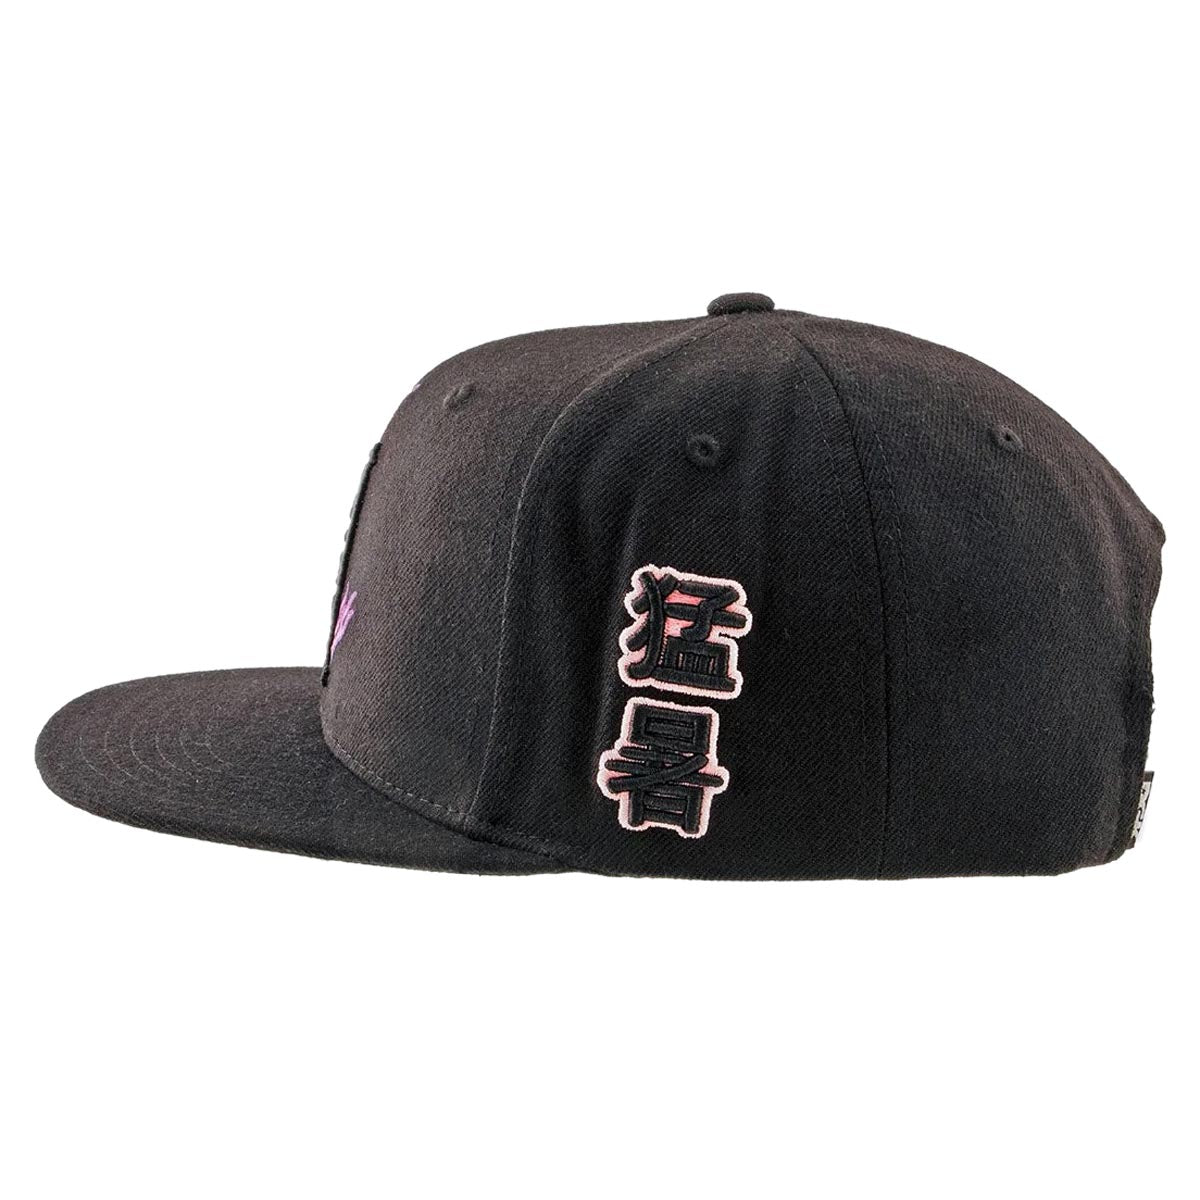 DGK Fire Blossom Snapback Hat - Black image 3